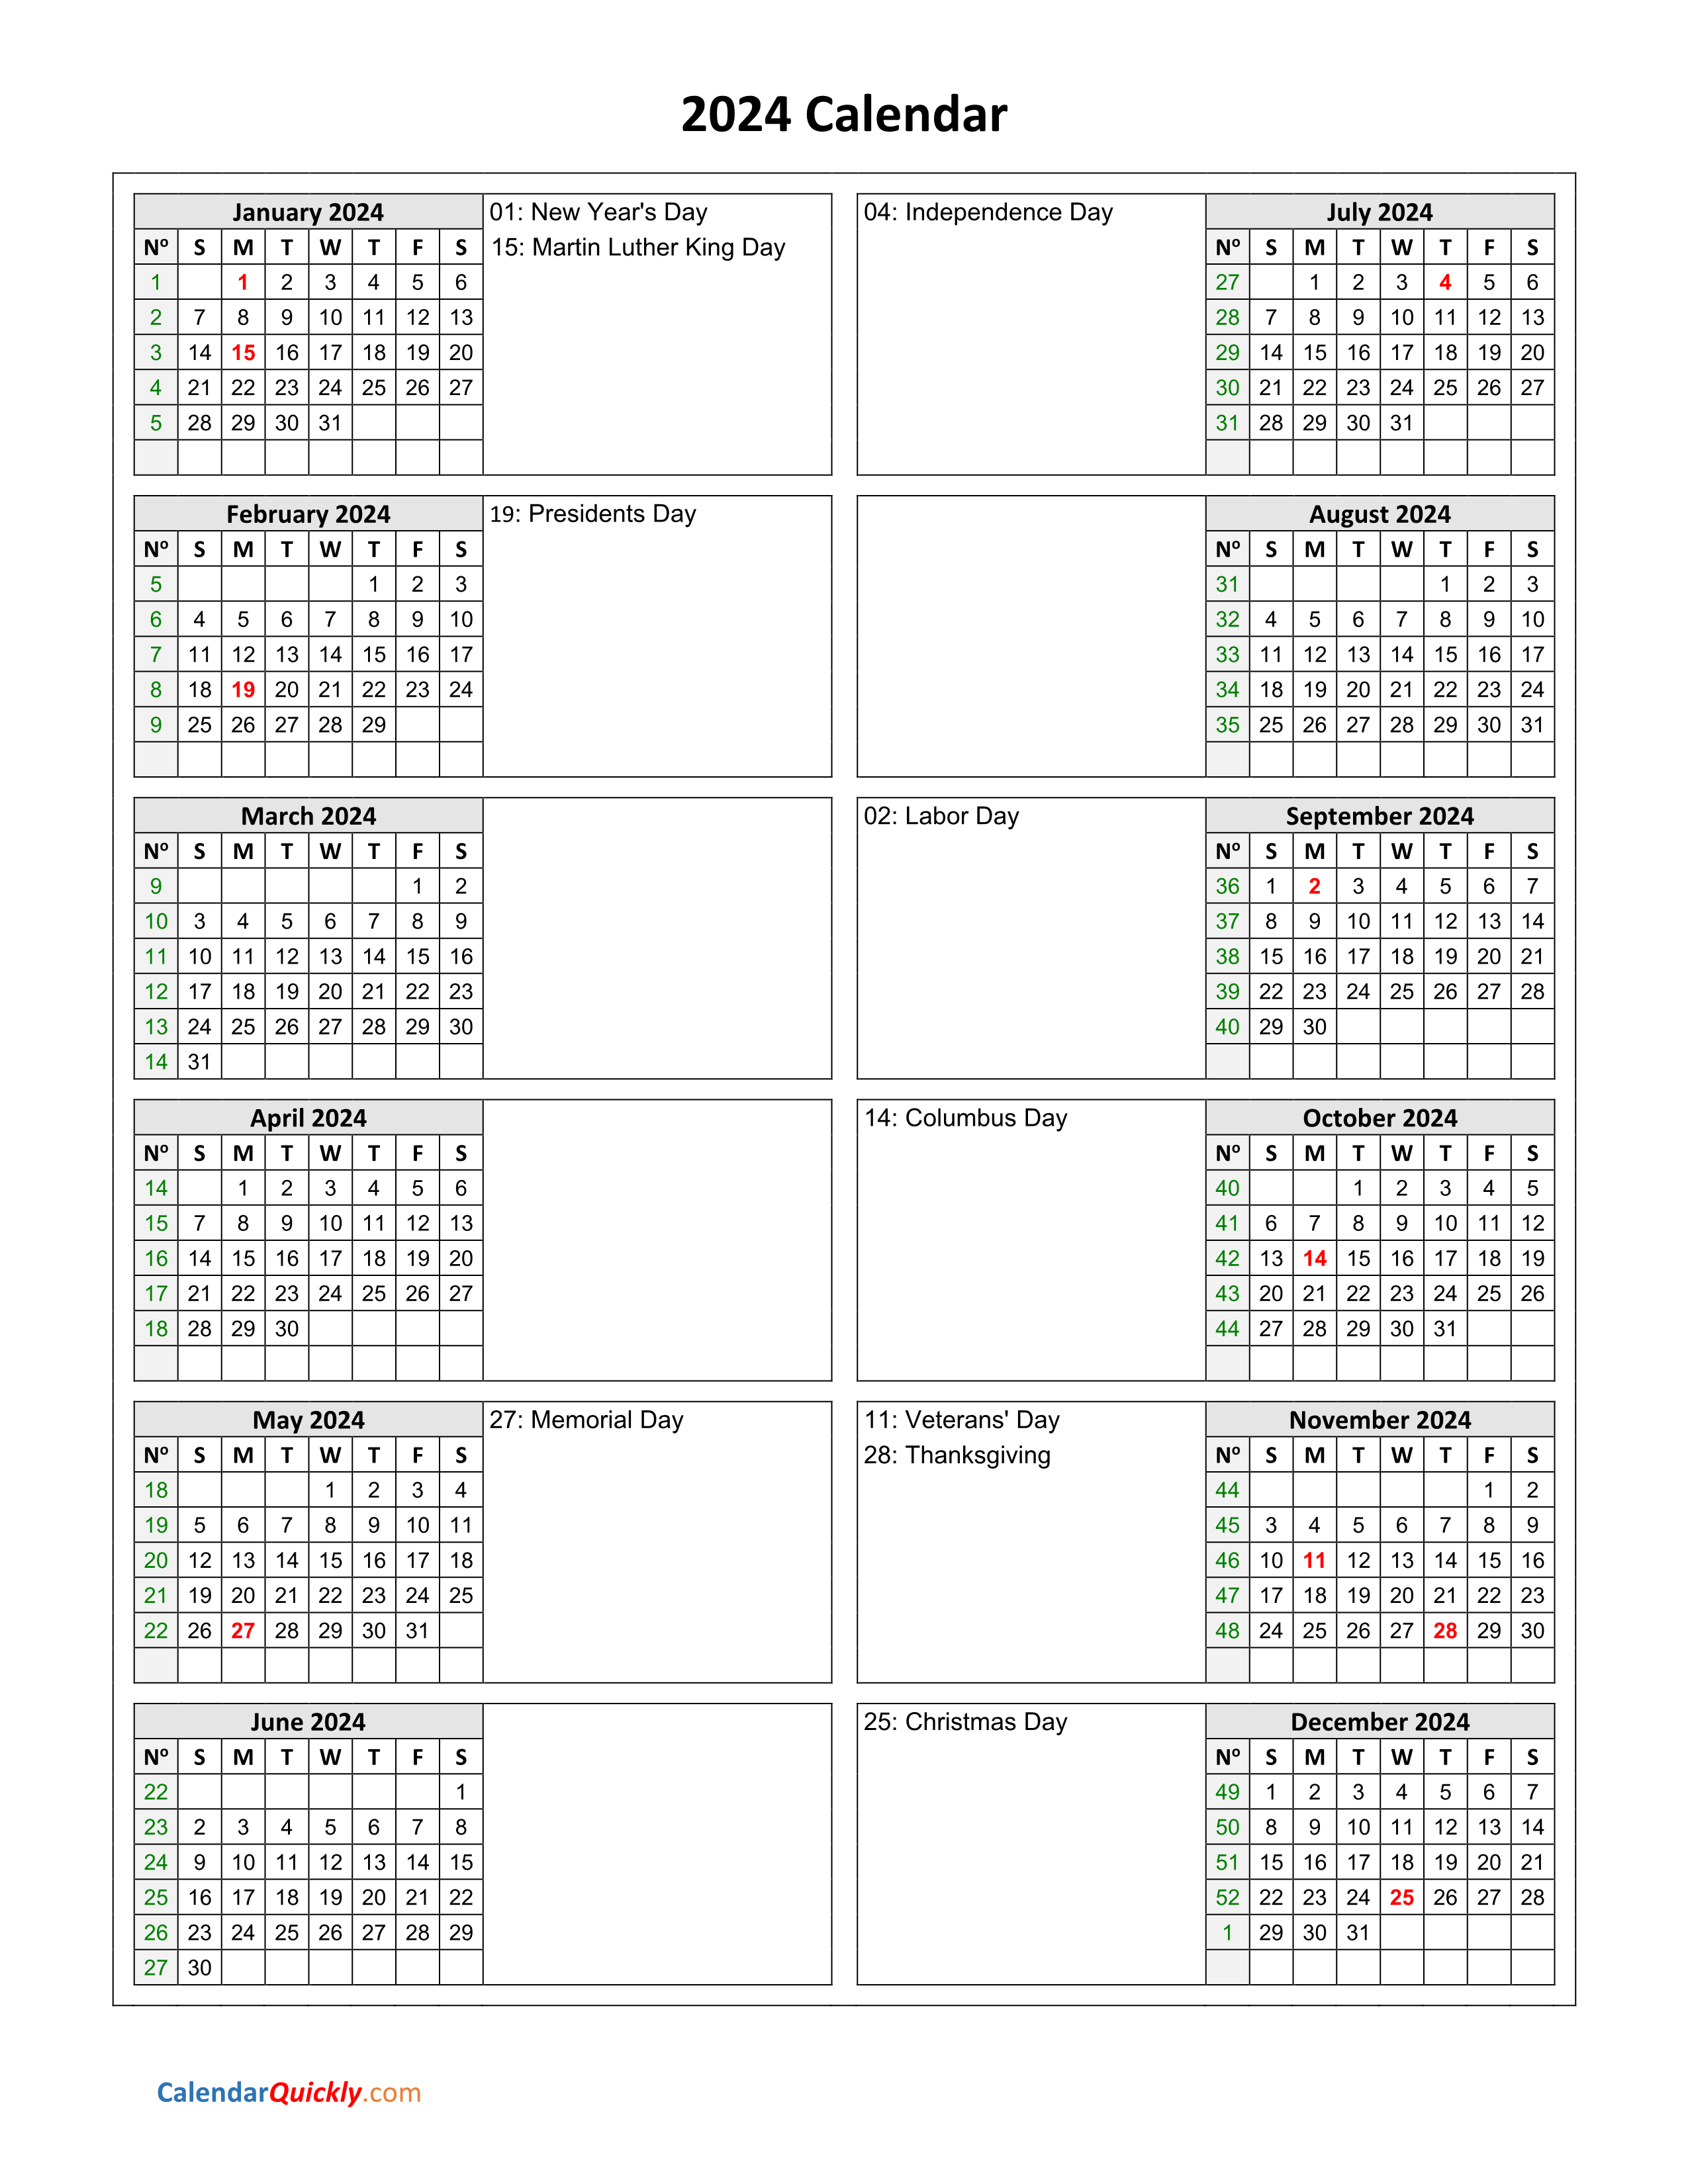 Printable Calendars 2024 Pdf Calendar 2024 With Federal Holidays - Free Printable 2024 Wall Calendar With Holidays